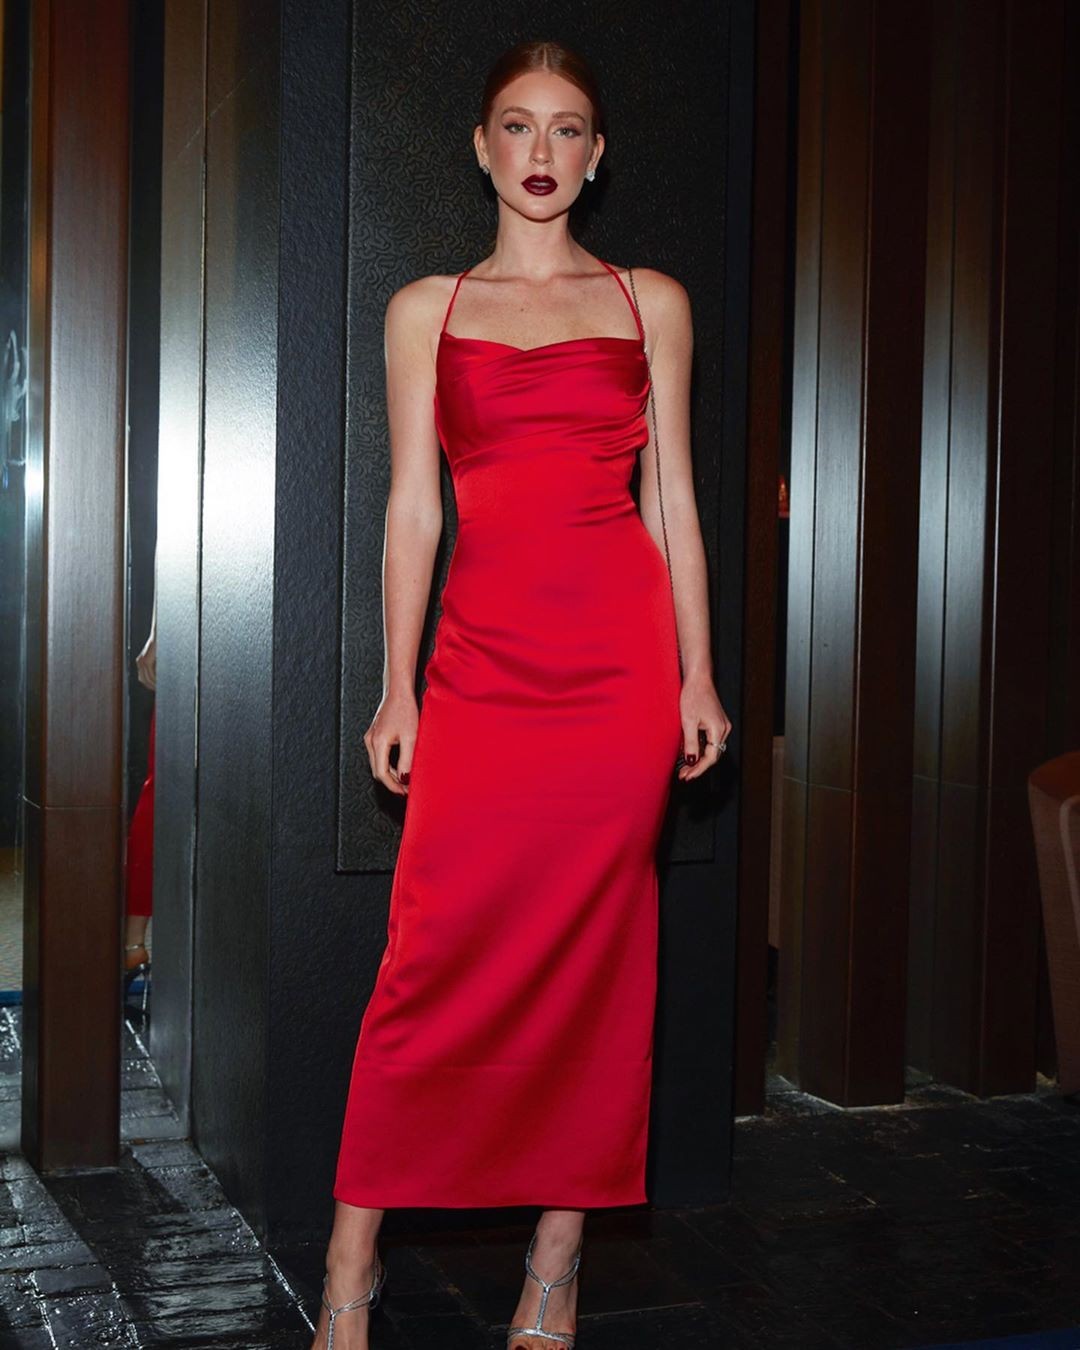 Marina Ruy Barbosa de vestido vermelho. (Foto: Instagram)